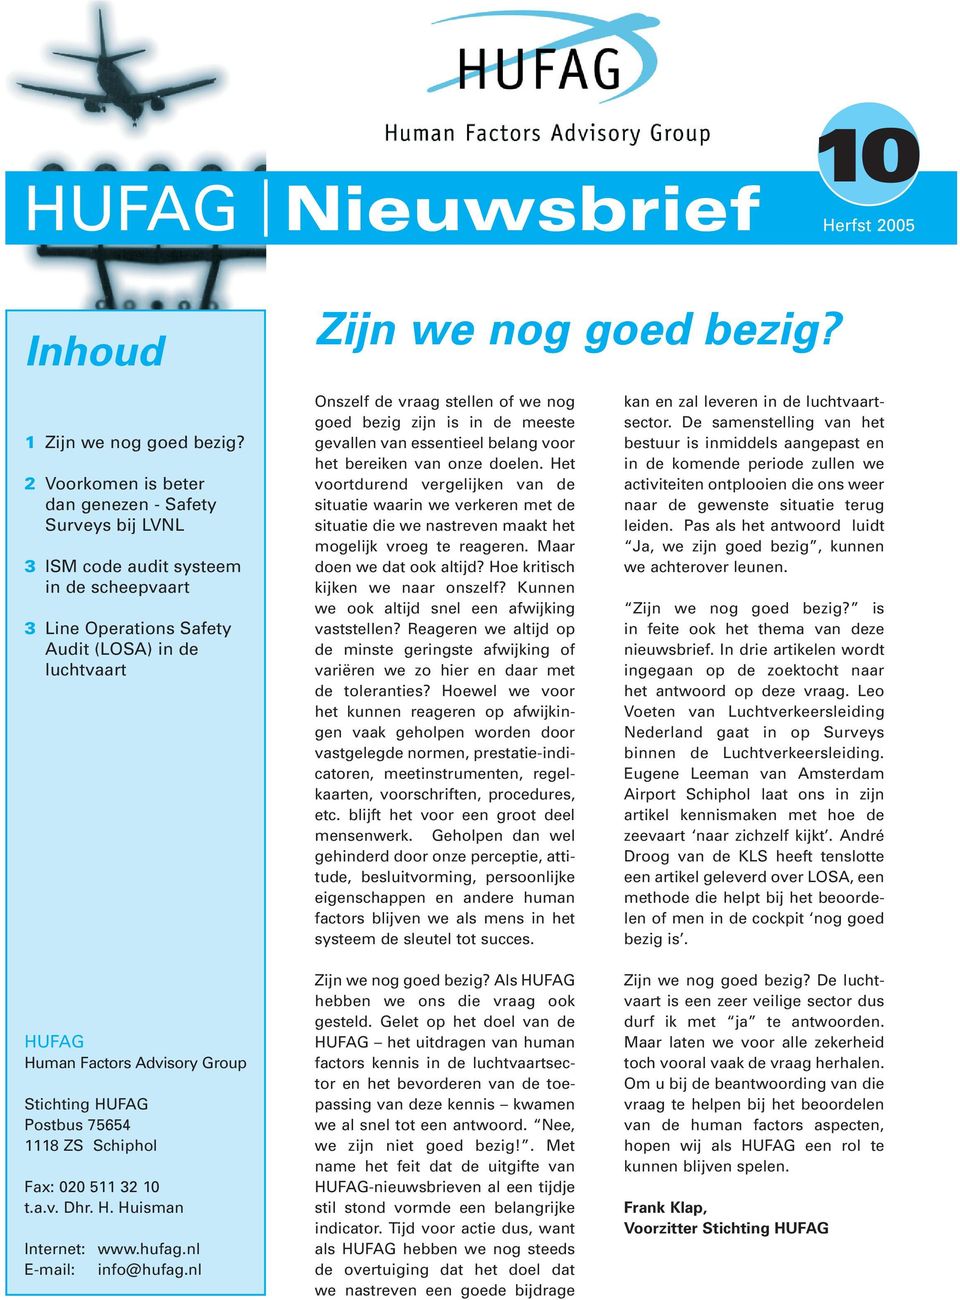 Stichting HUFAG Postbus 75654 1118 ZS Schiphol Fax: 020 511 32 10 t.a.v. Dhr. H. Huisman Internet: www.hufag.nl E-mail: info@hufag.